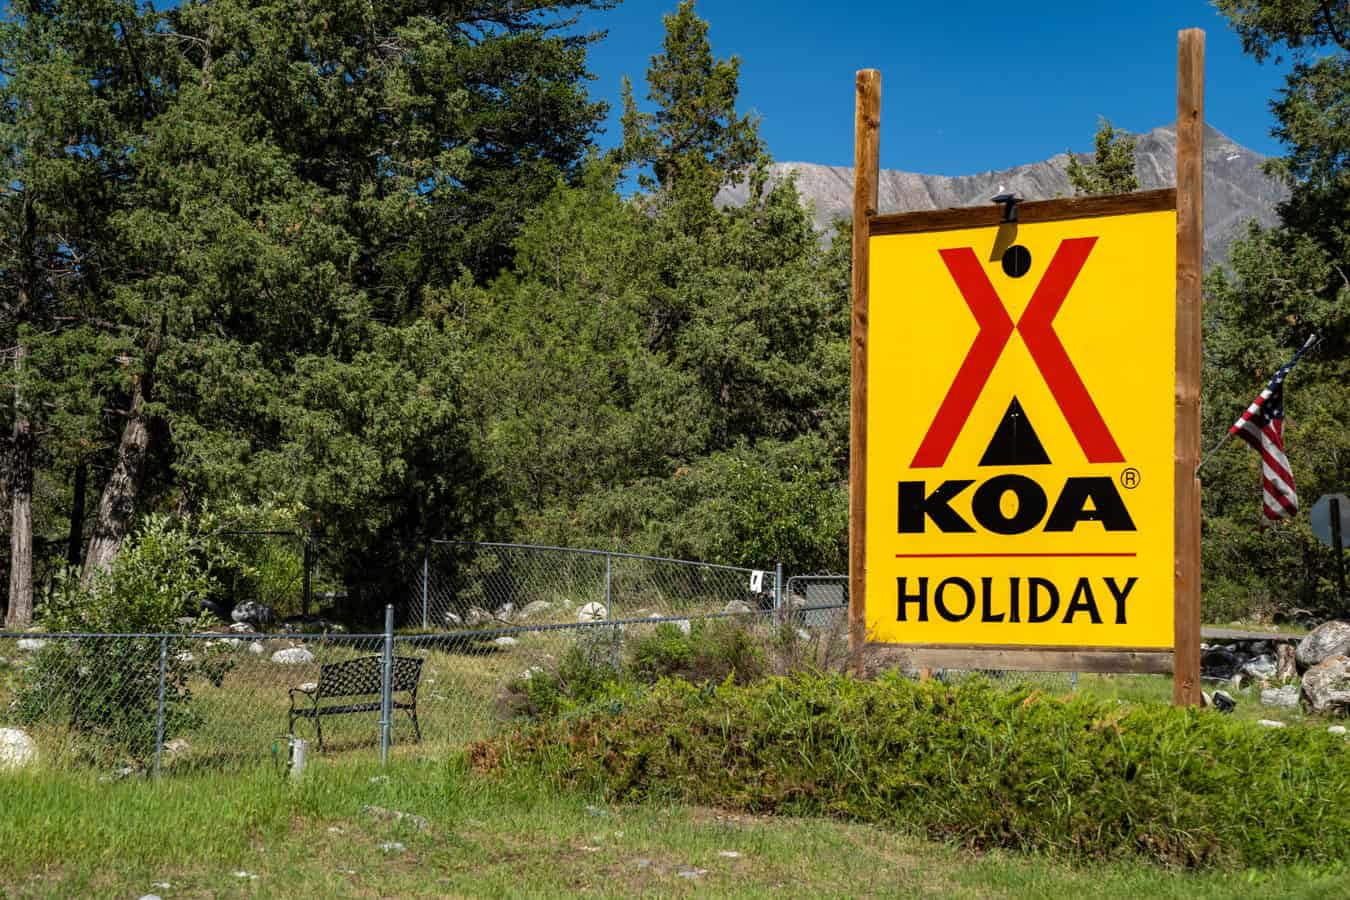 KOA campground sign at campground entrance.